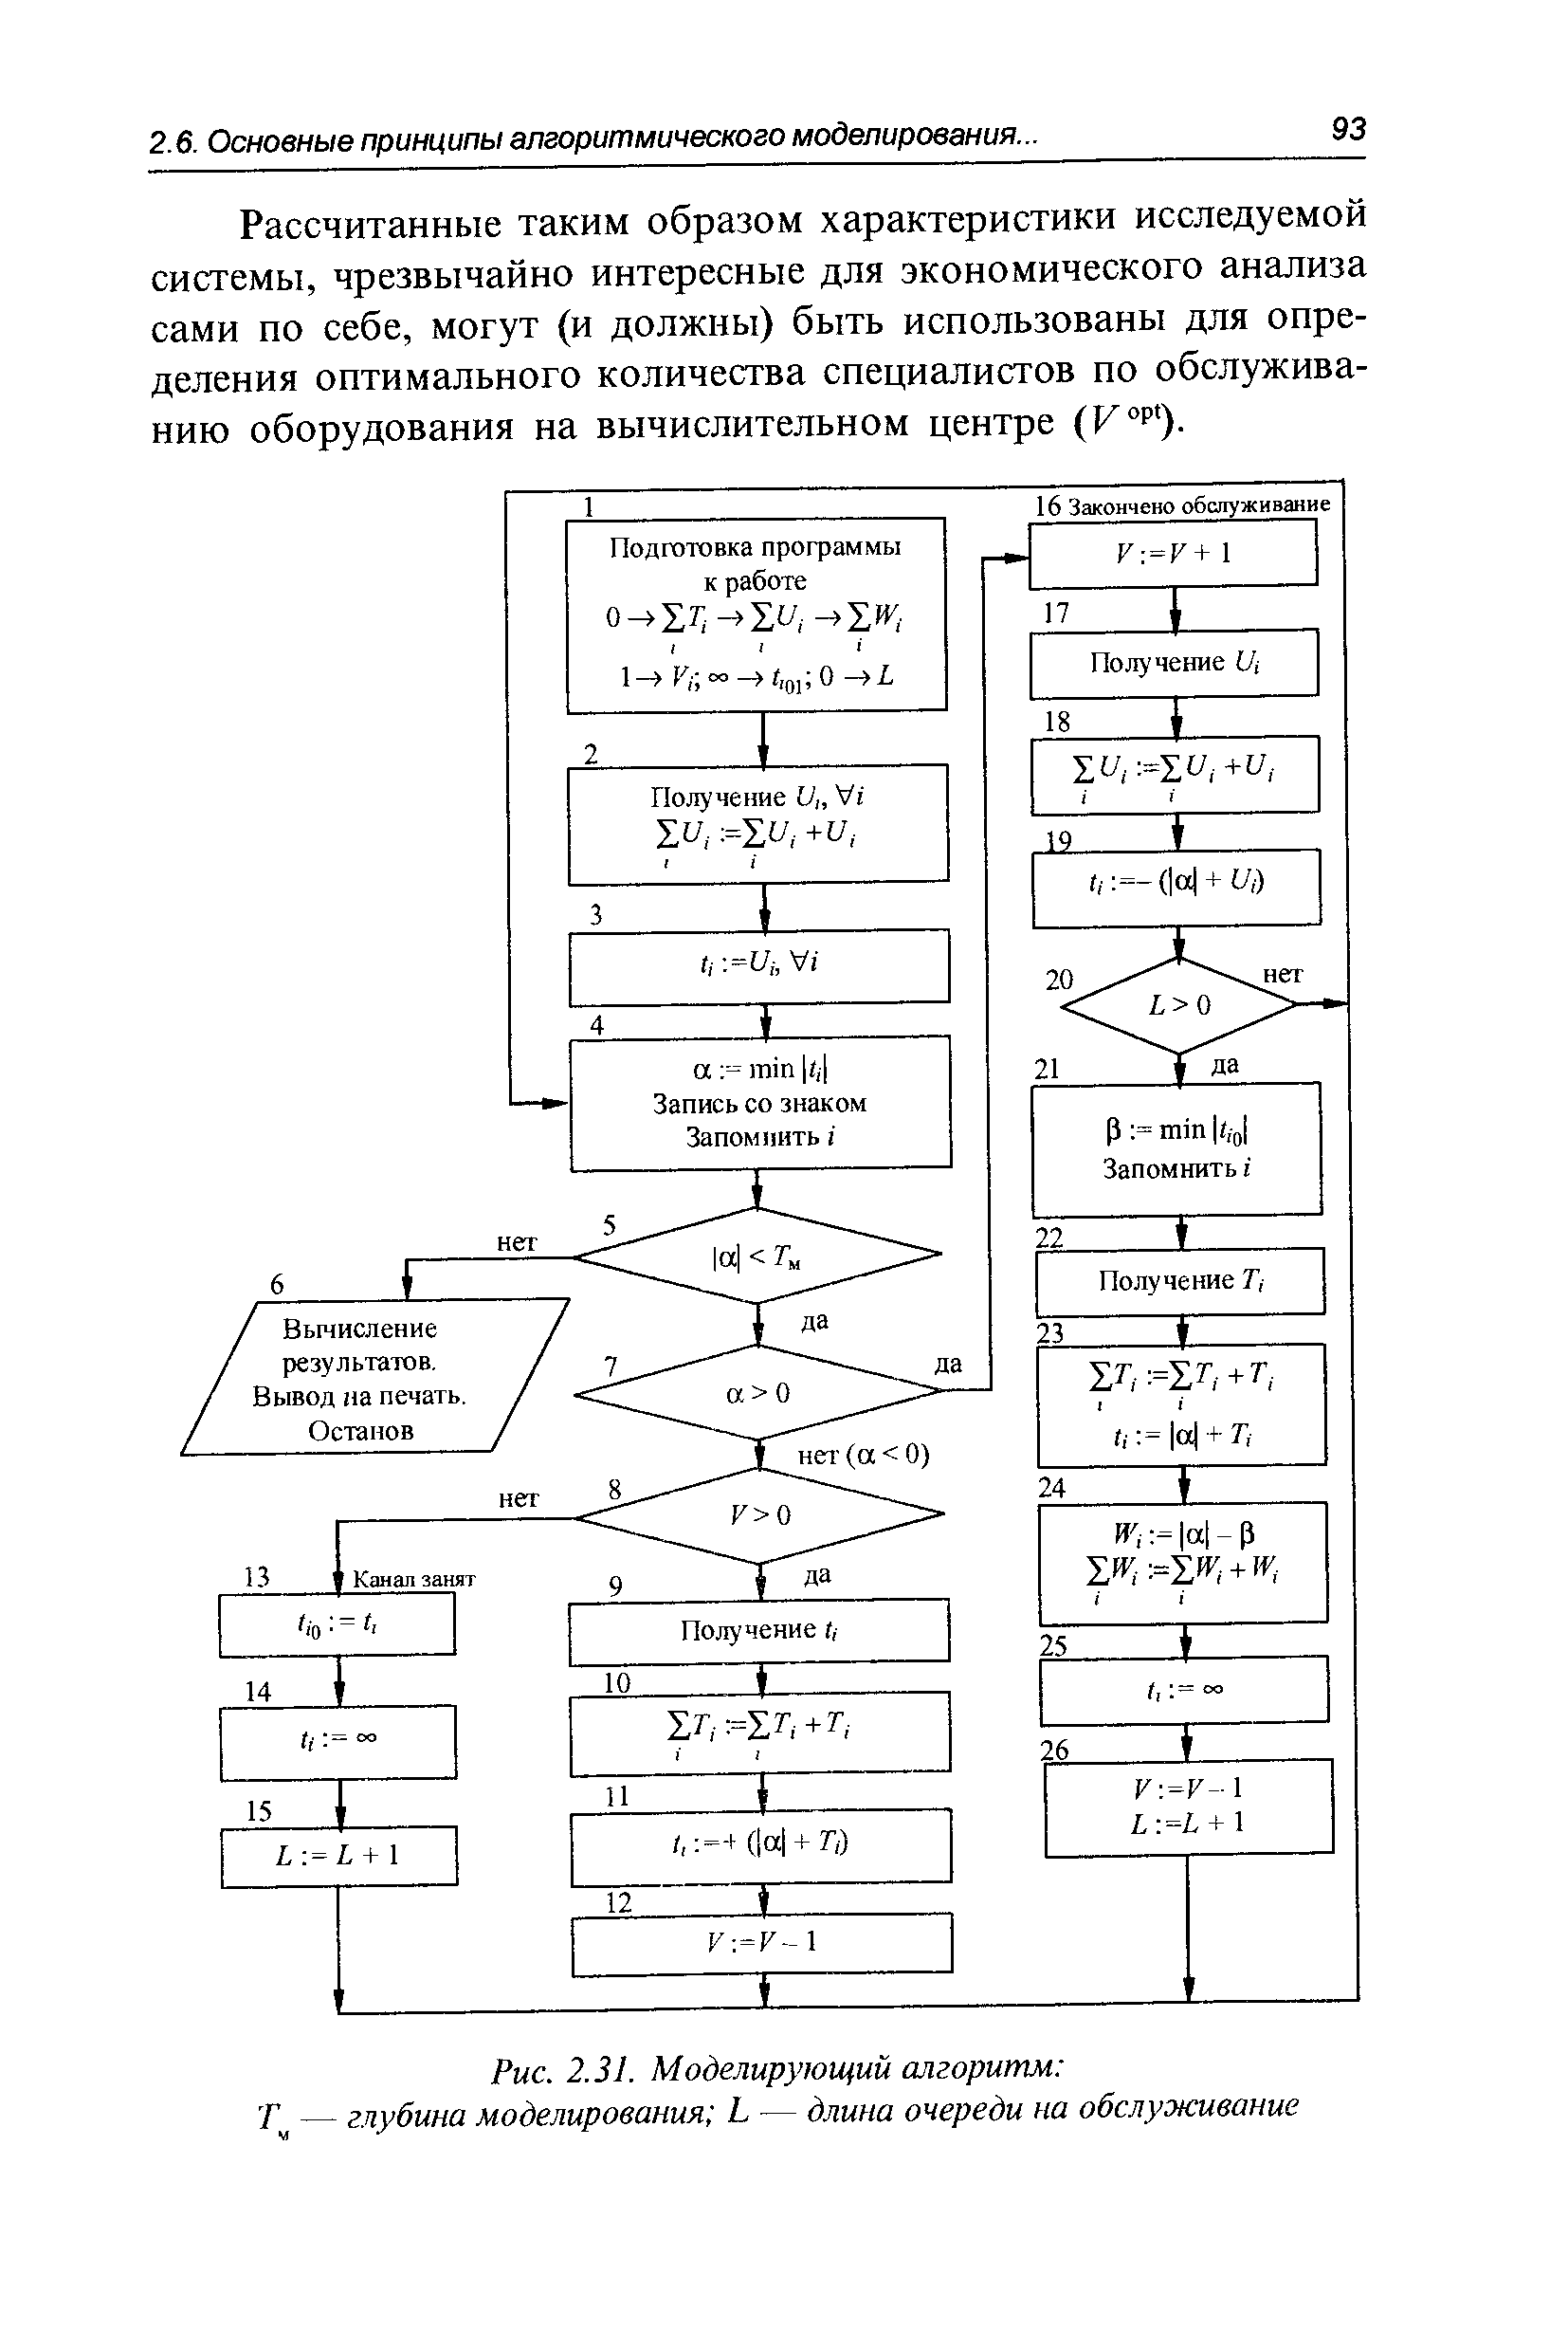 Рис. 2.3J. Моделирующий алгоритм v — глубина моделирования L — <a href="/info/19519">длина очереди</a> на обслуживание
